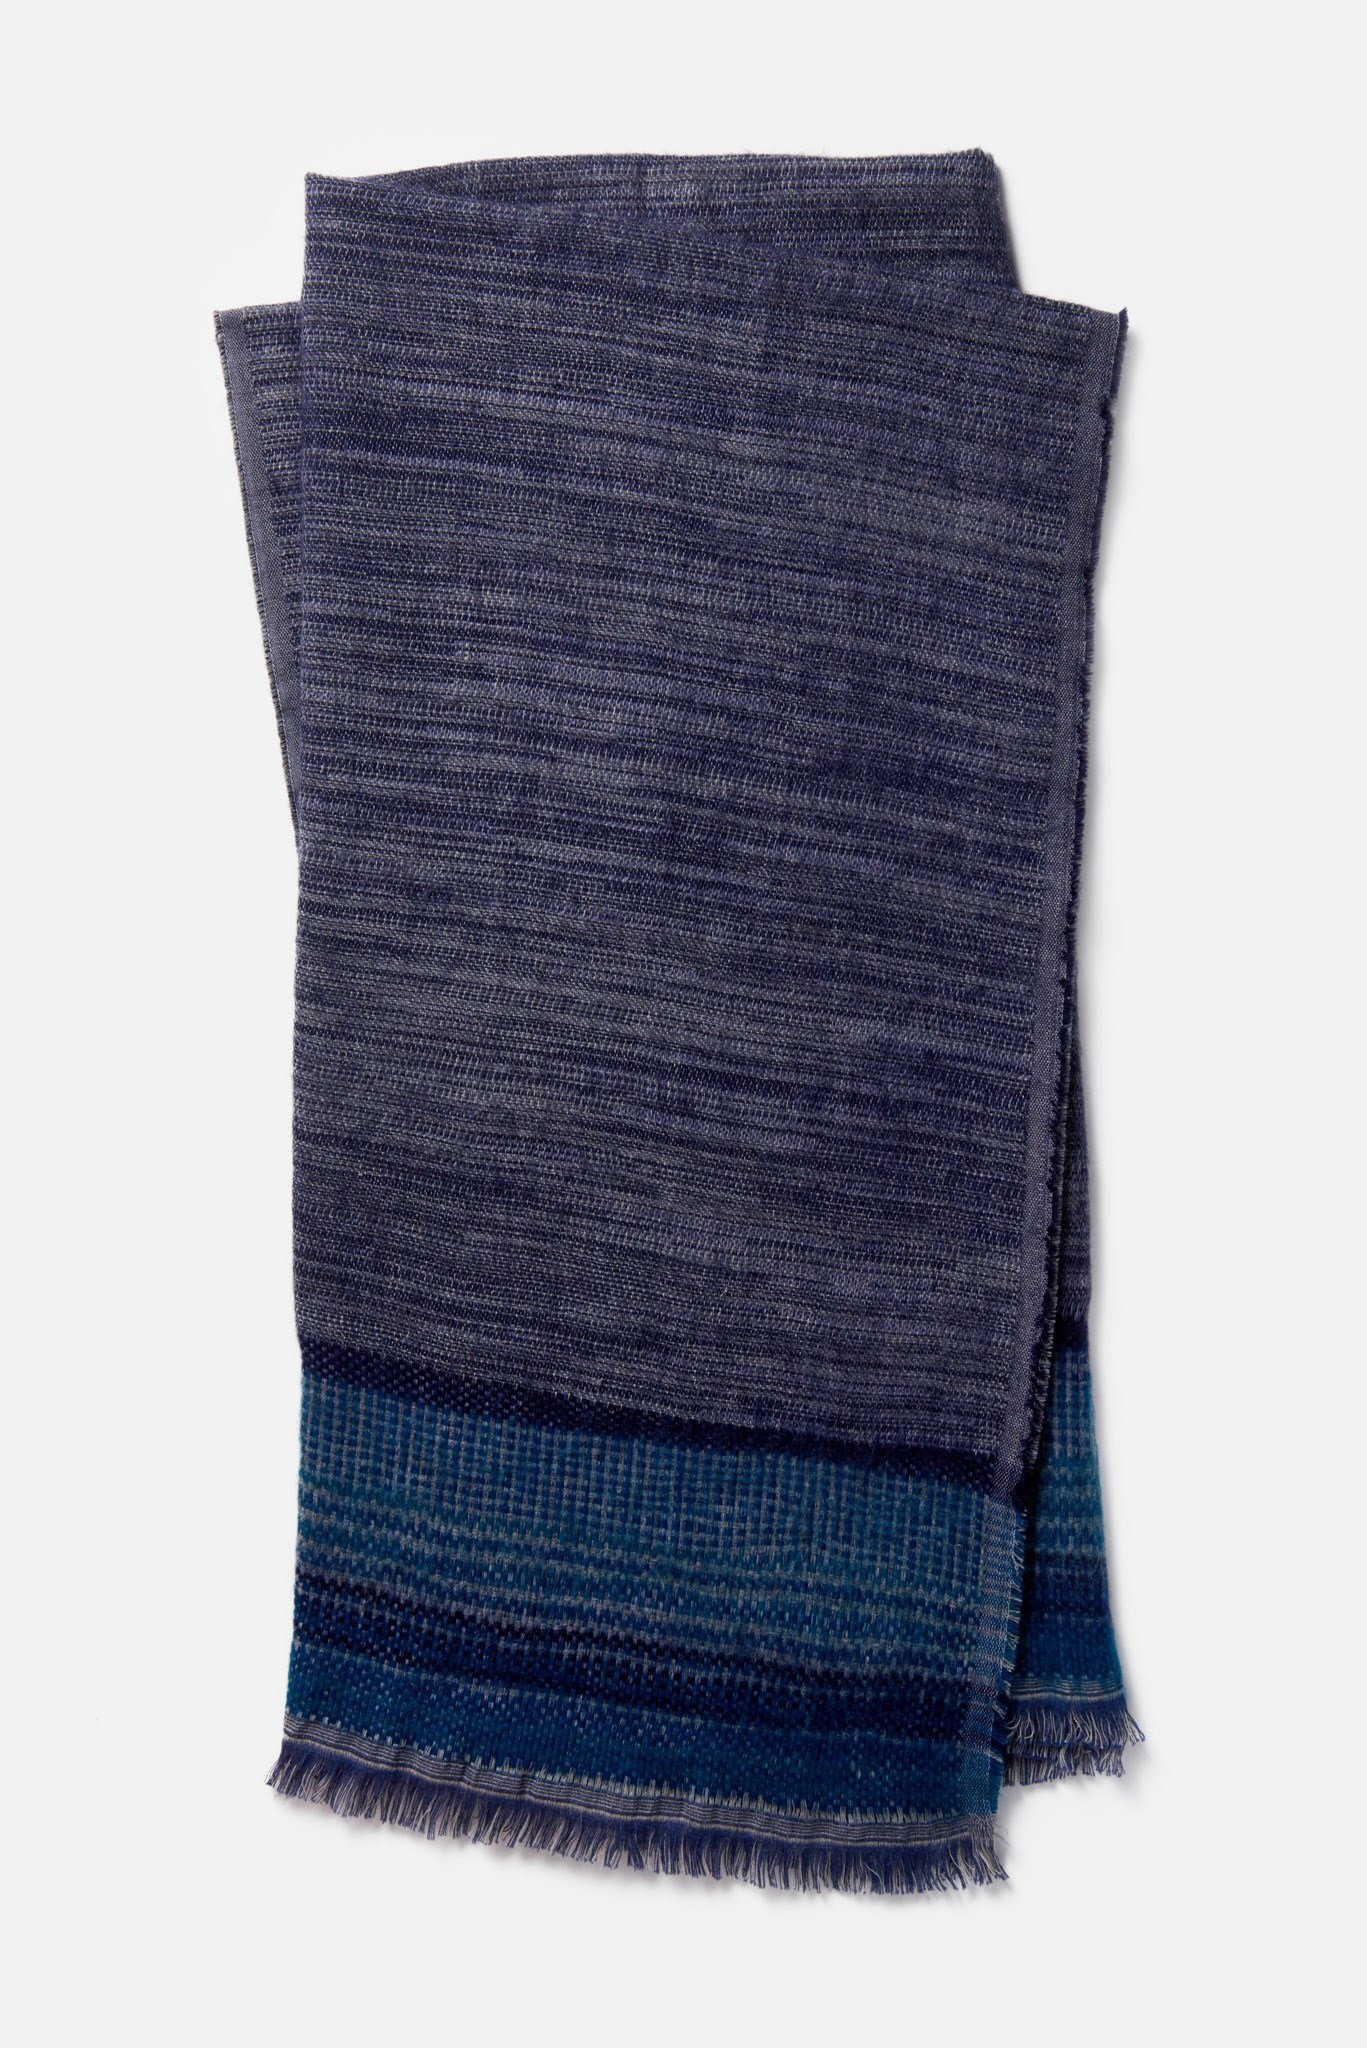 Alissa Throw Blanket, 50" x 60", Navy Blue - Image 0